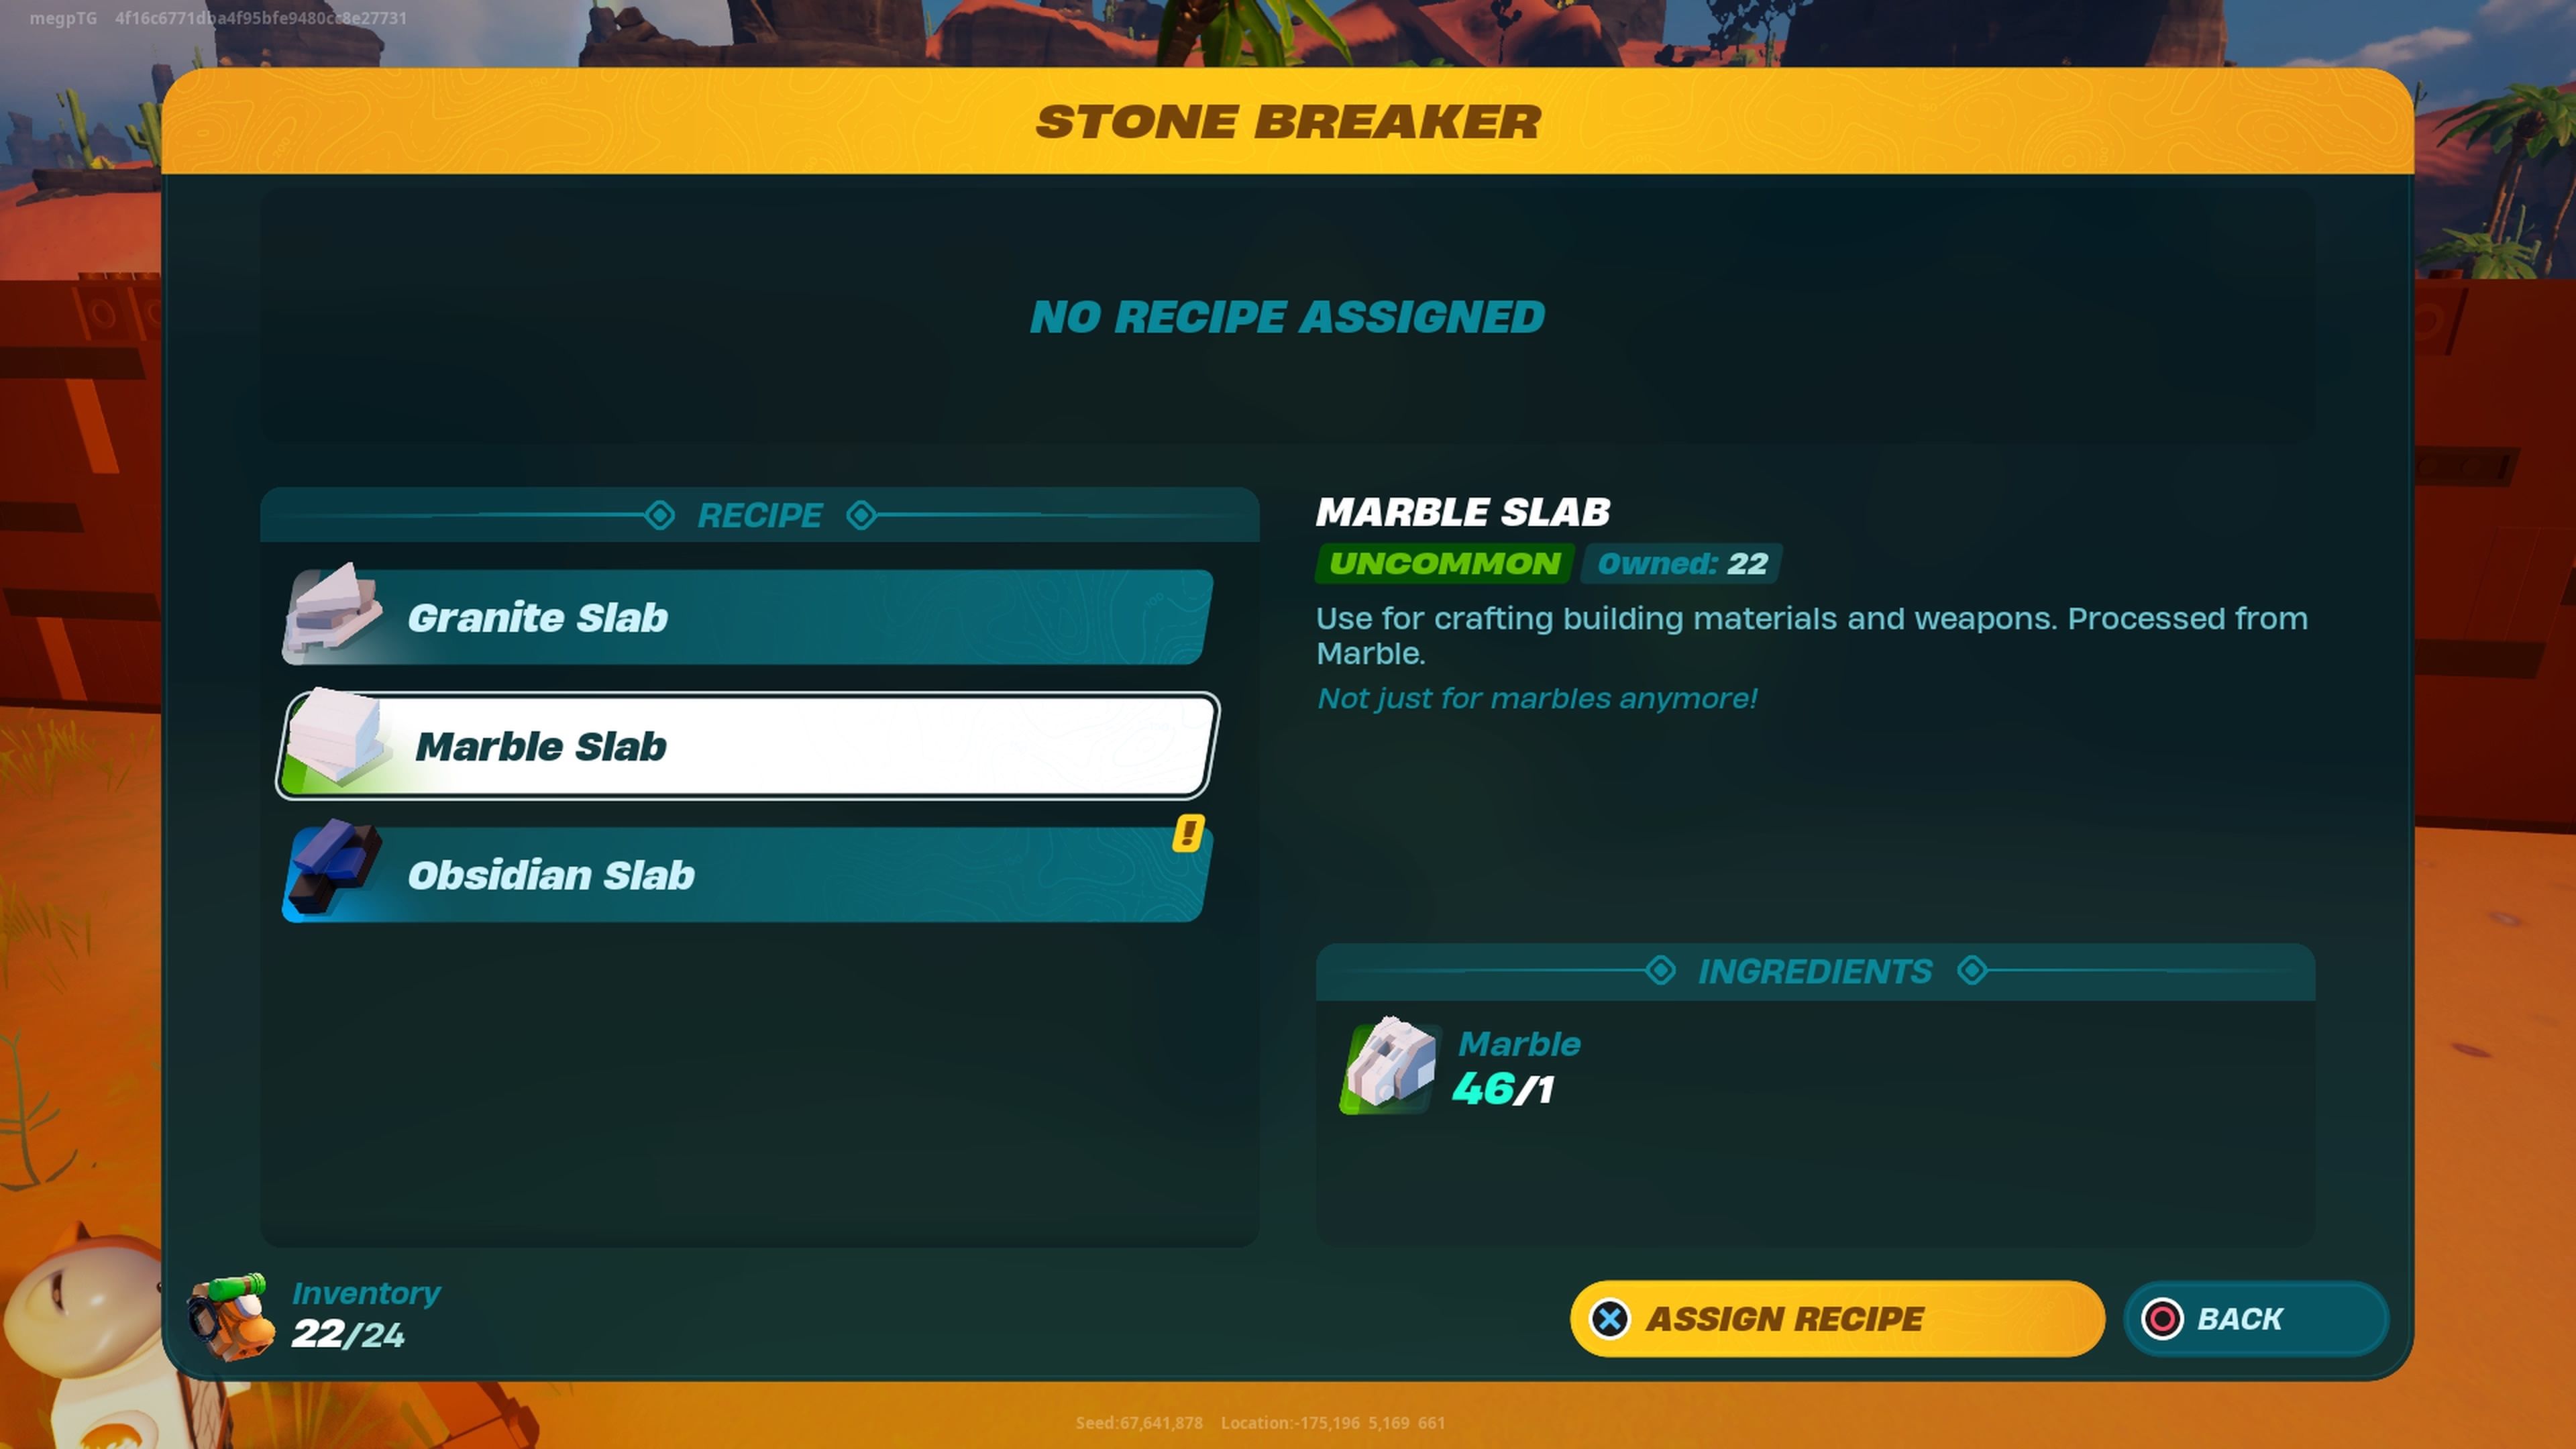 The Stone Breaker menu in Lego Fortnite.